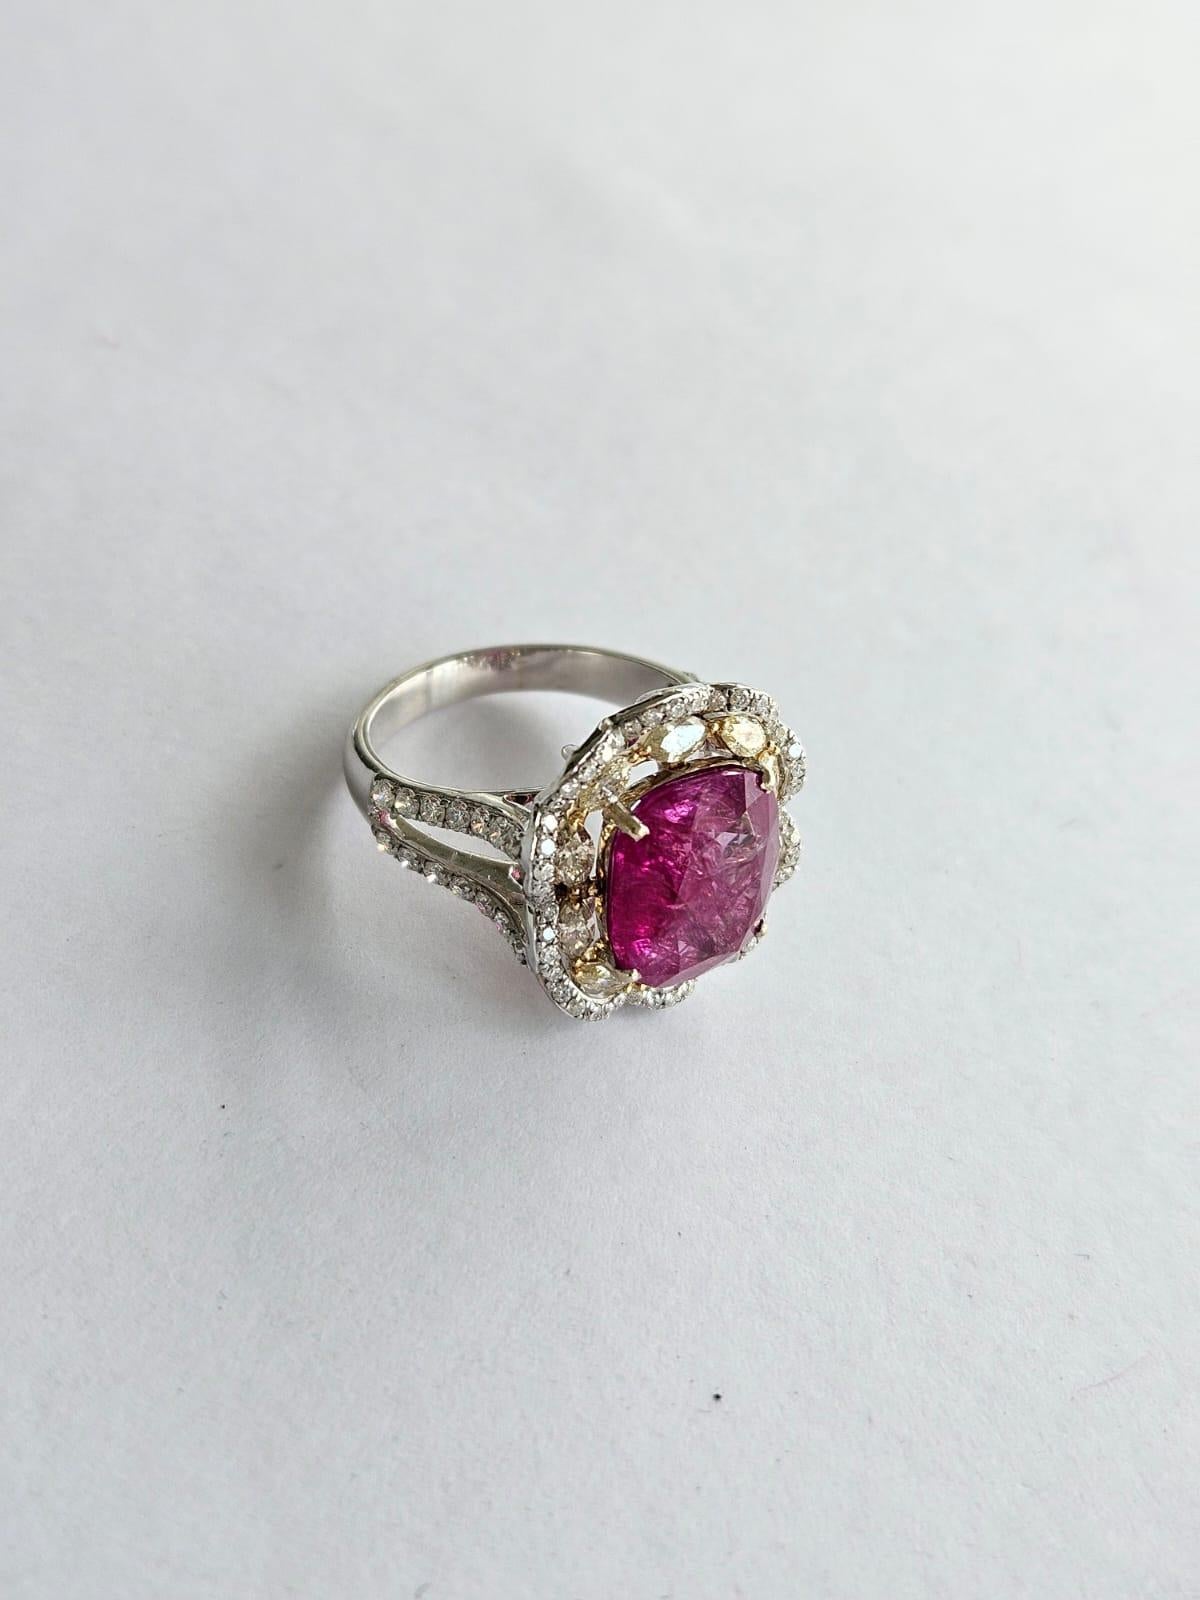 Cushion Cut GJEPC Certified 6.24 carats unheat natural Burma Ruby & Diamonds Engagement Ring For Sale